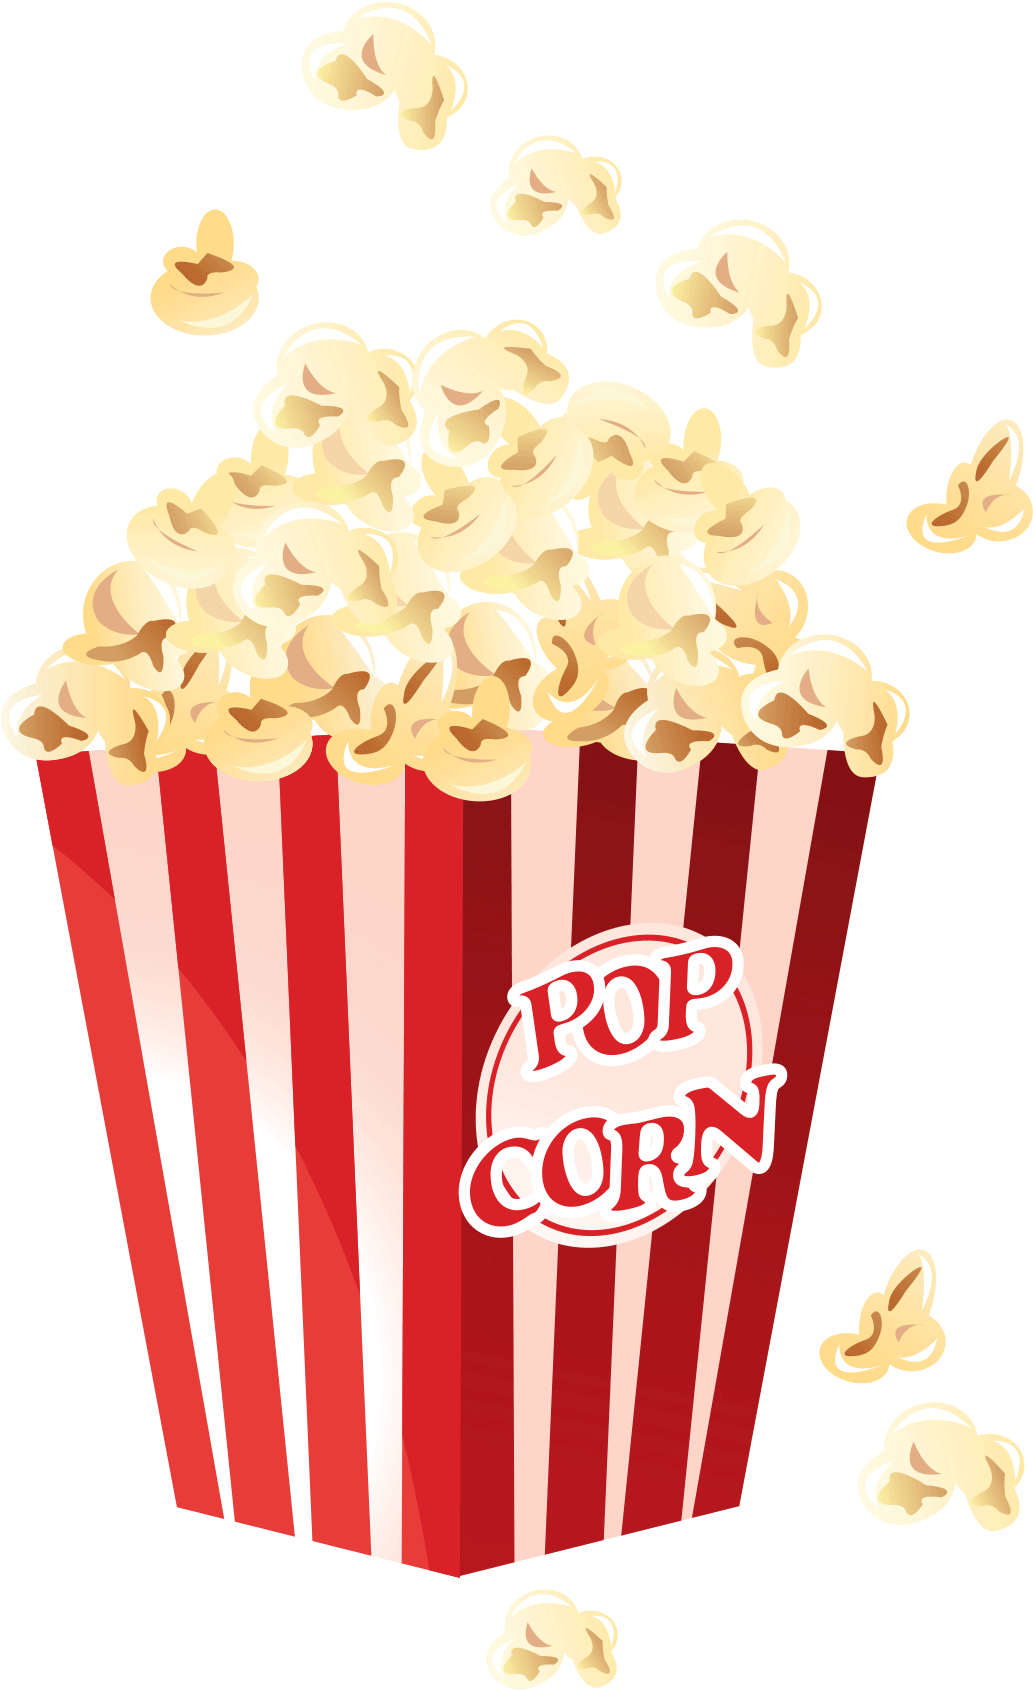 web, logo, popcorn box png photo background